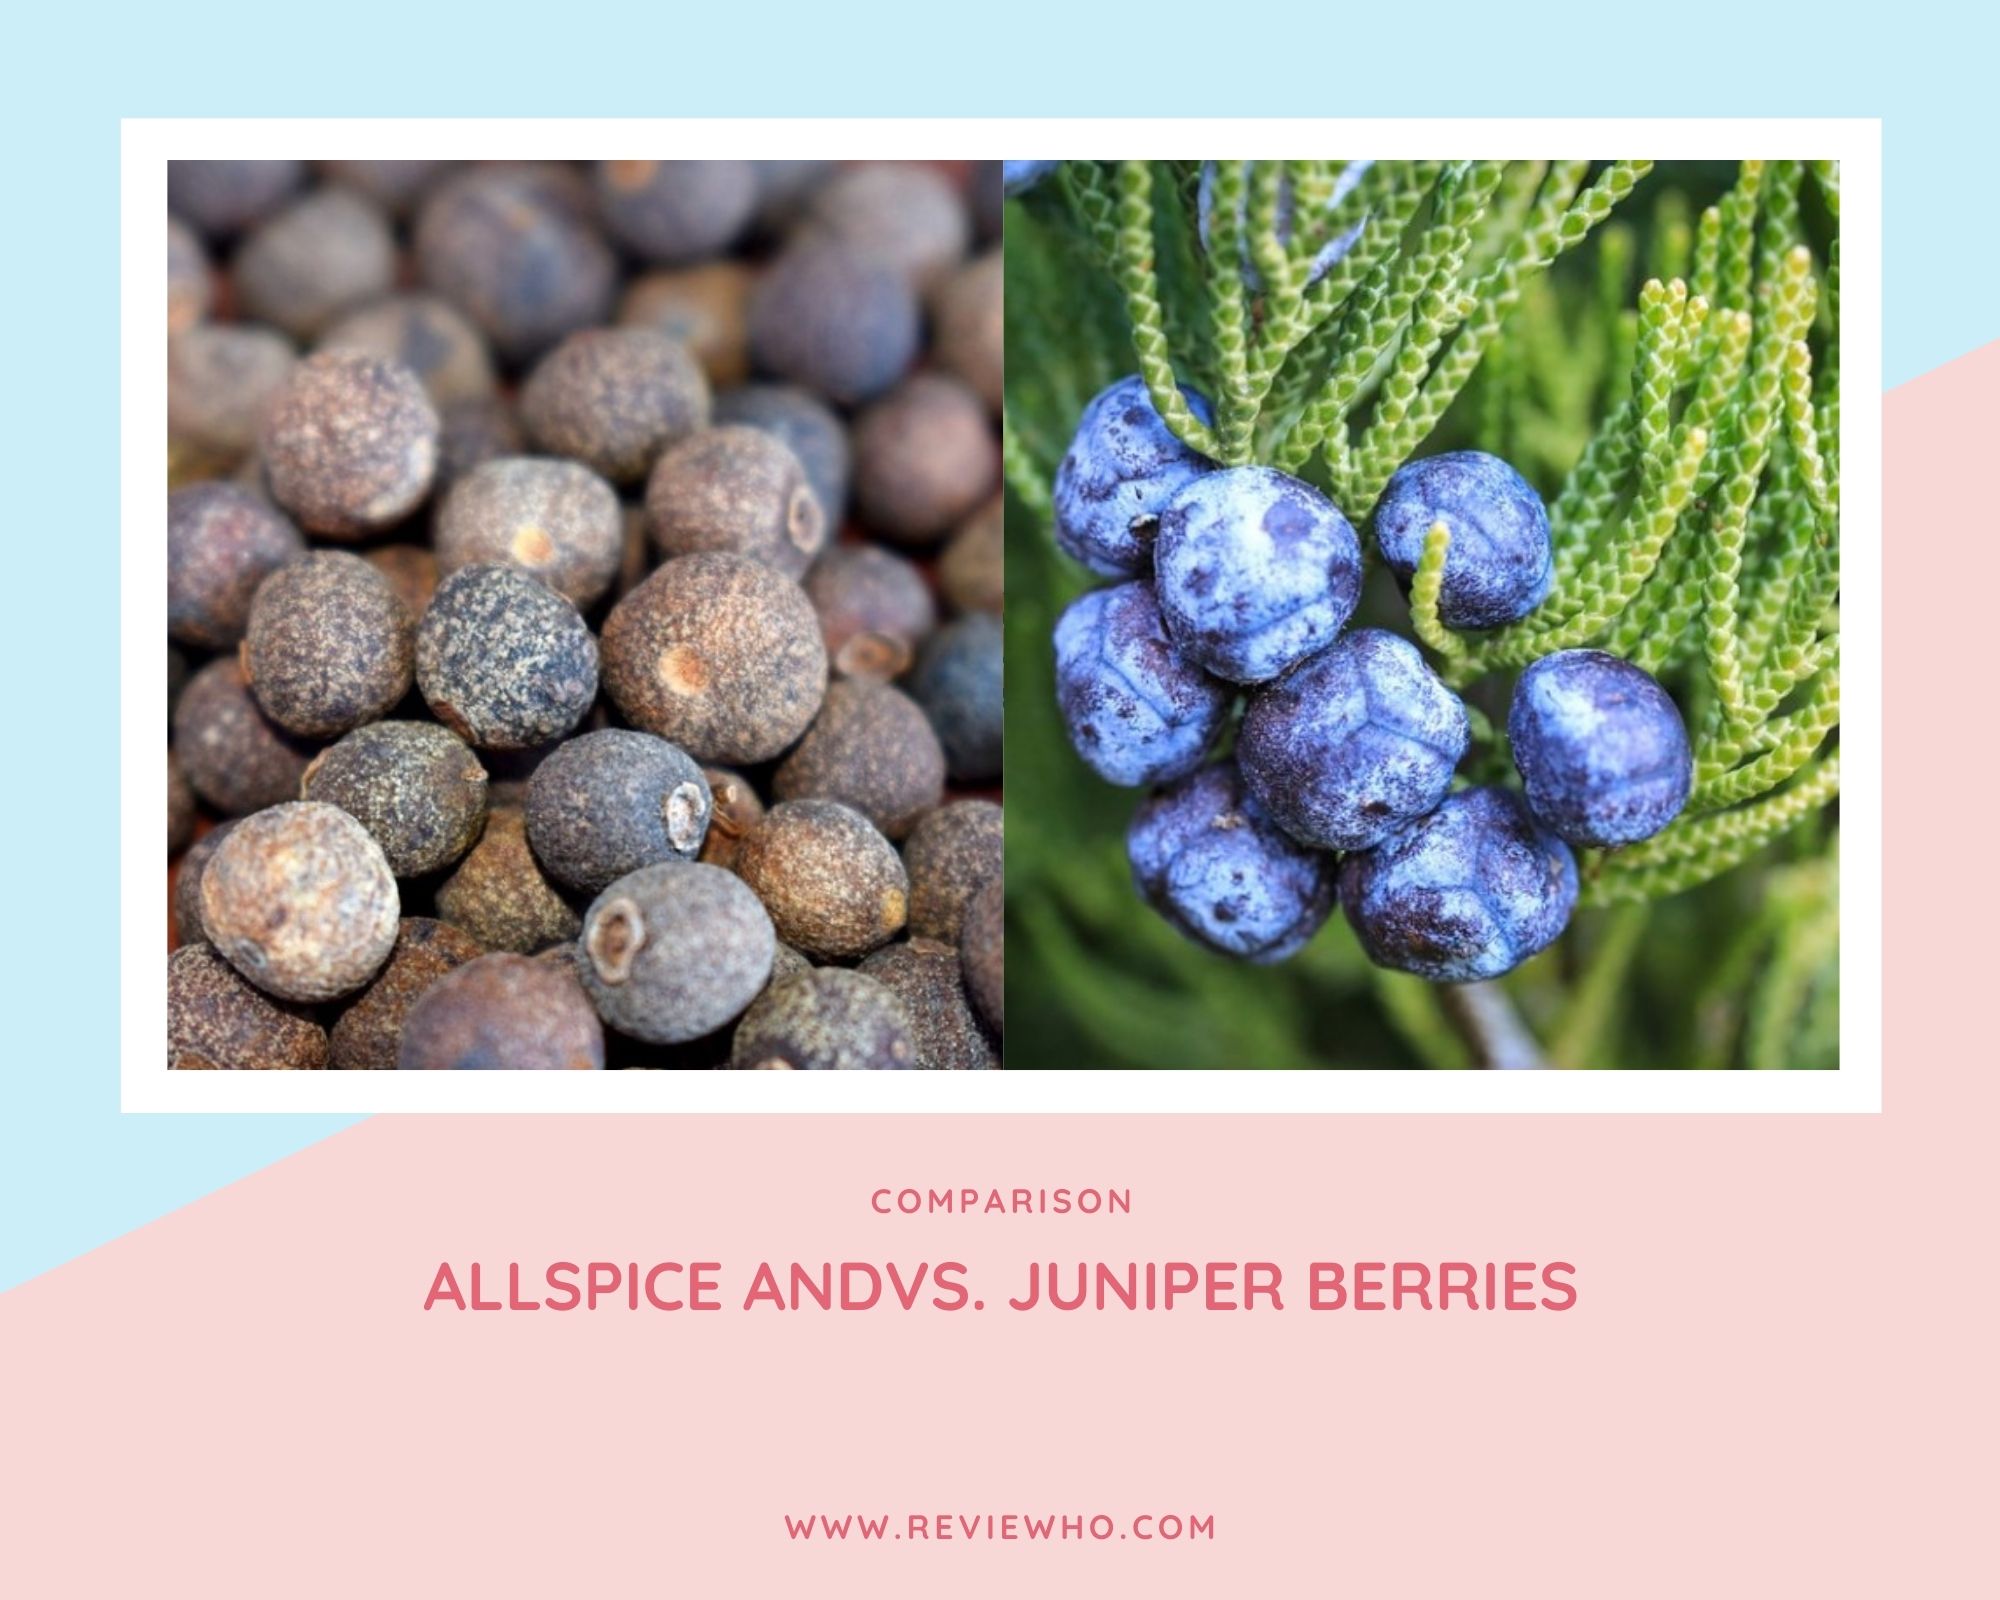 Allspice versus Juniper Berries